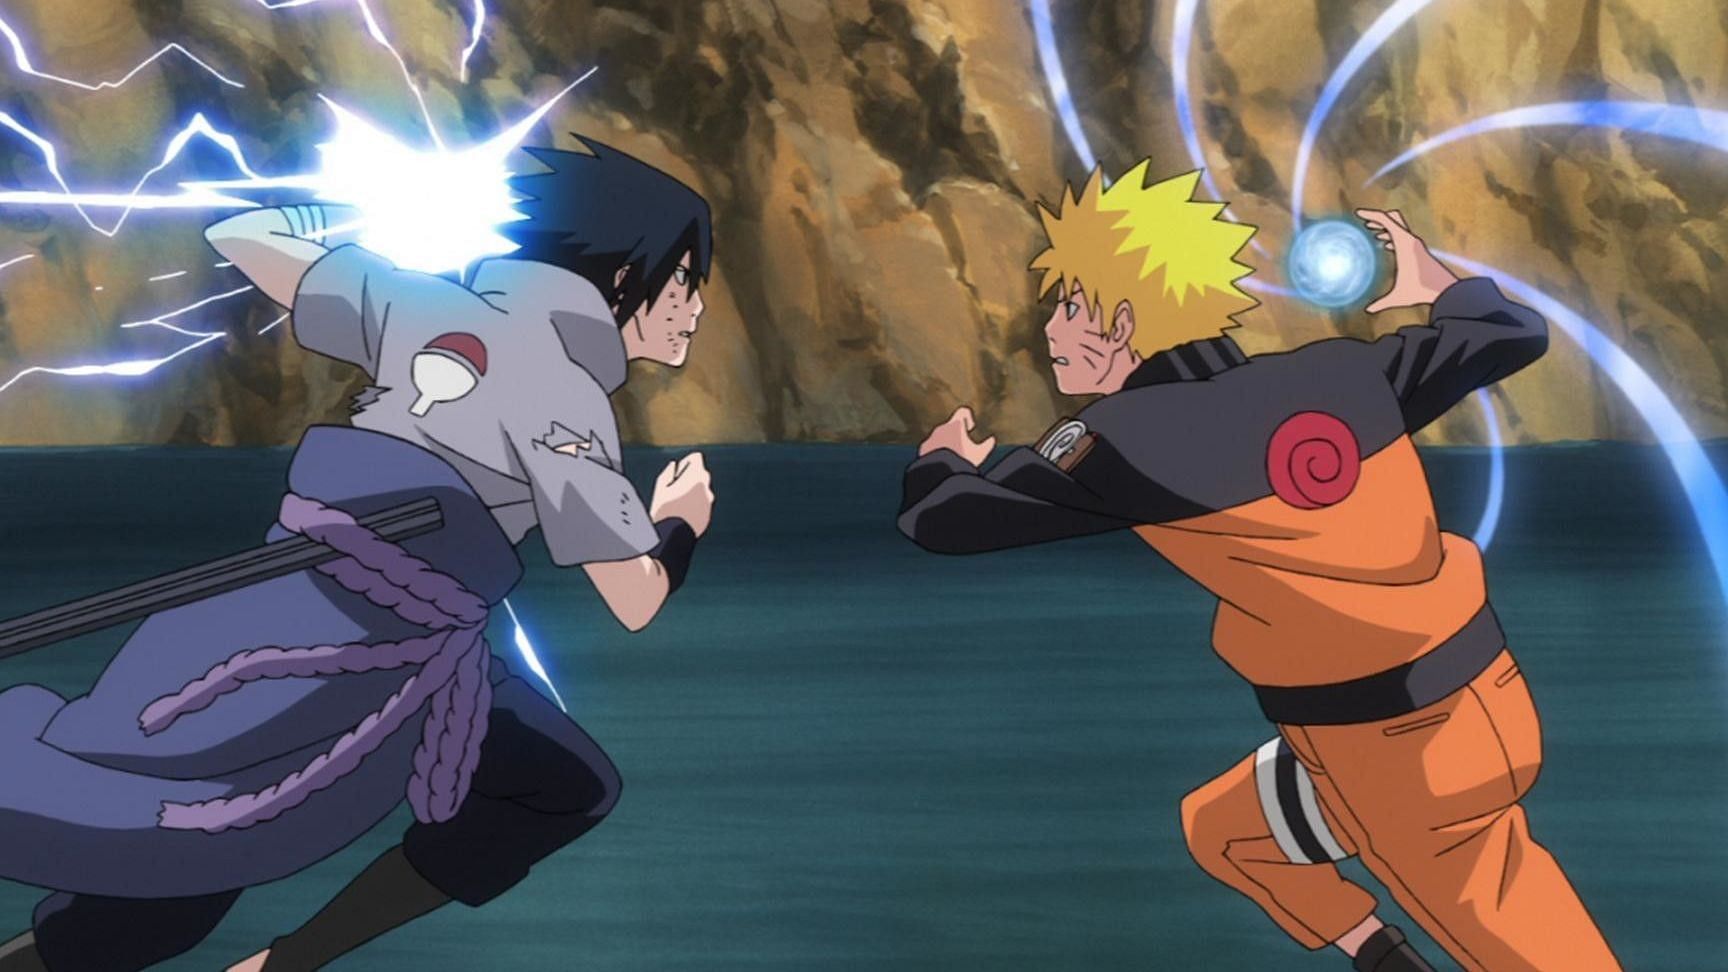 Naruto vs. Sasuke (Image via Pierrot)